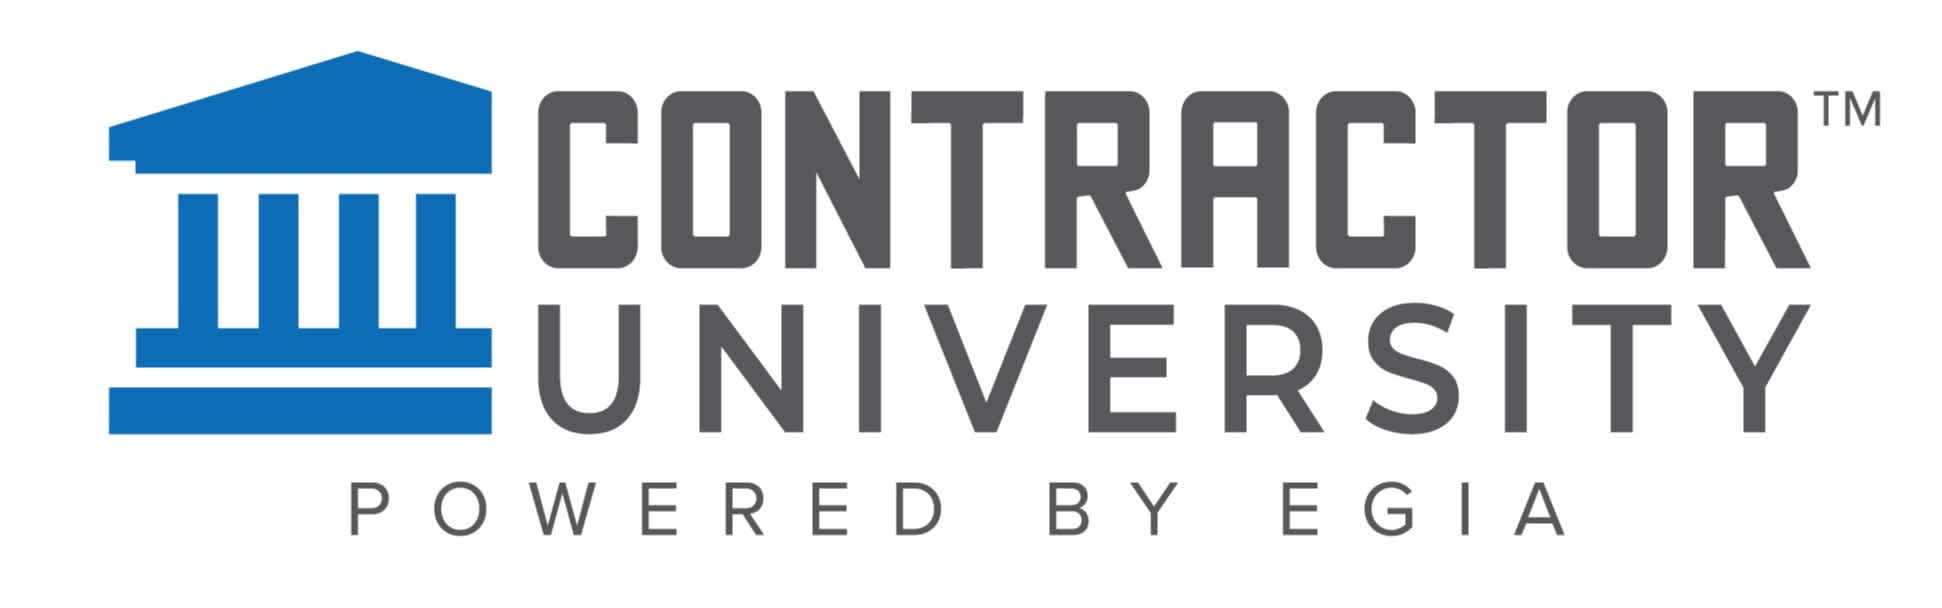 Contractor University Powered by EGIA Logo